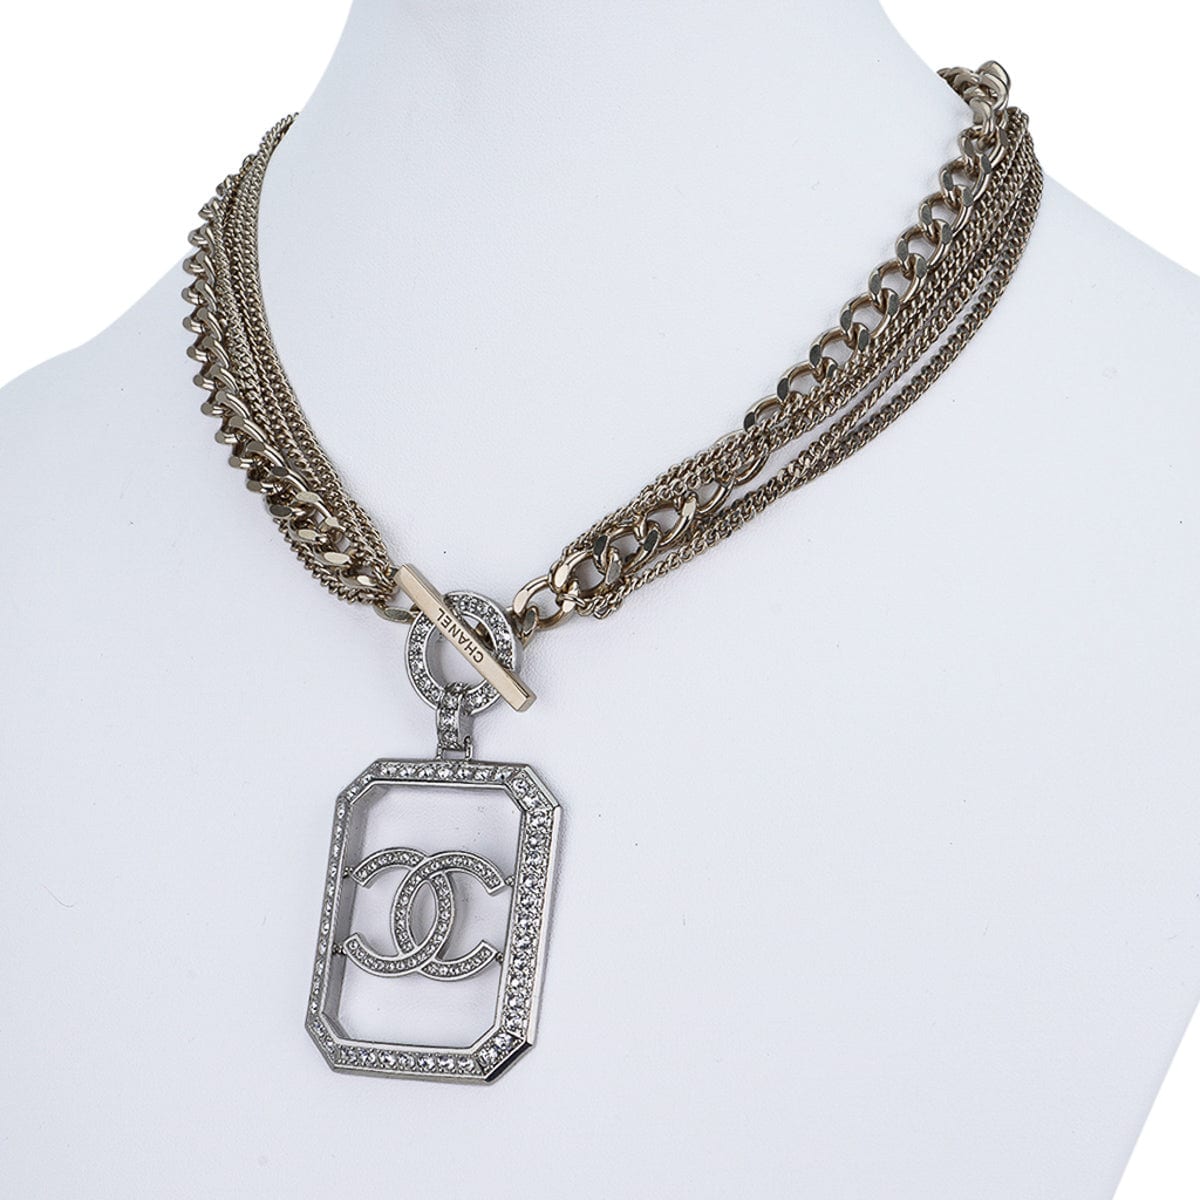 DLX  Designer Label Xchange  Small Chanel silver necklace   Facebook